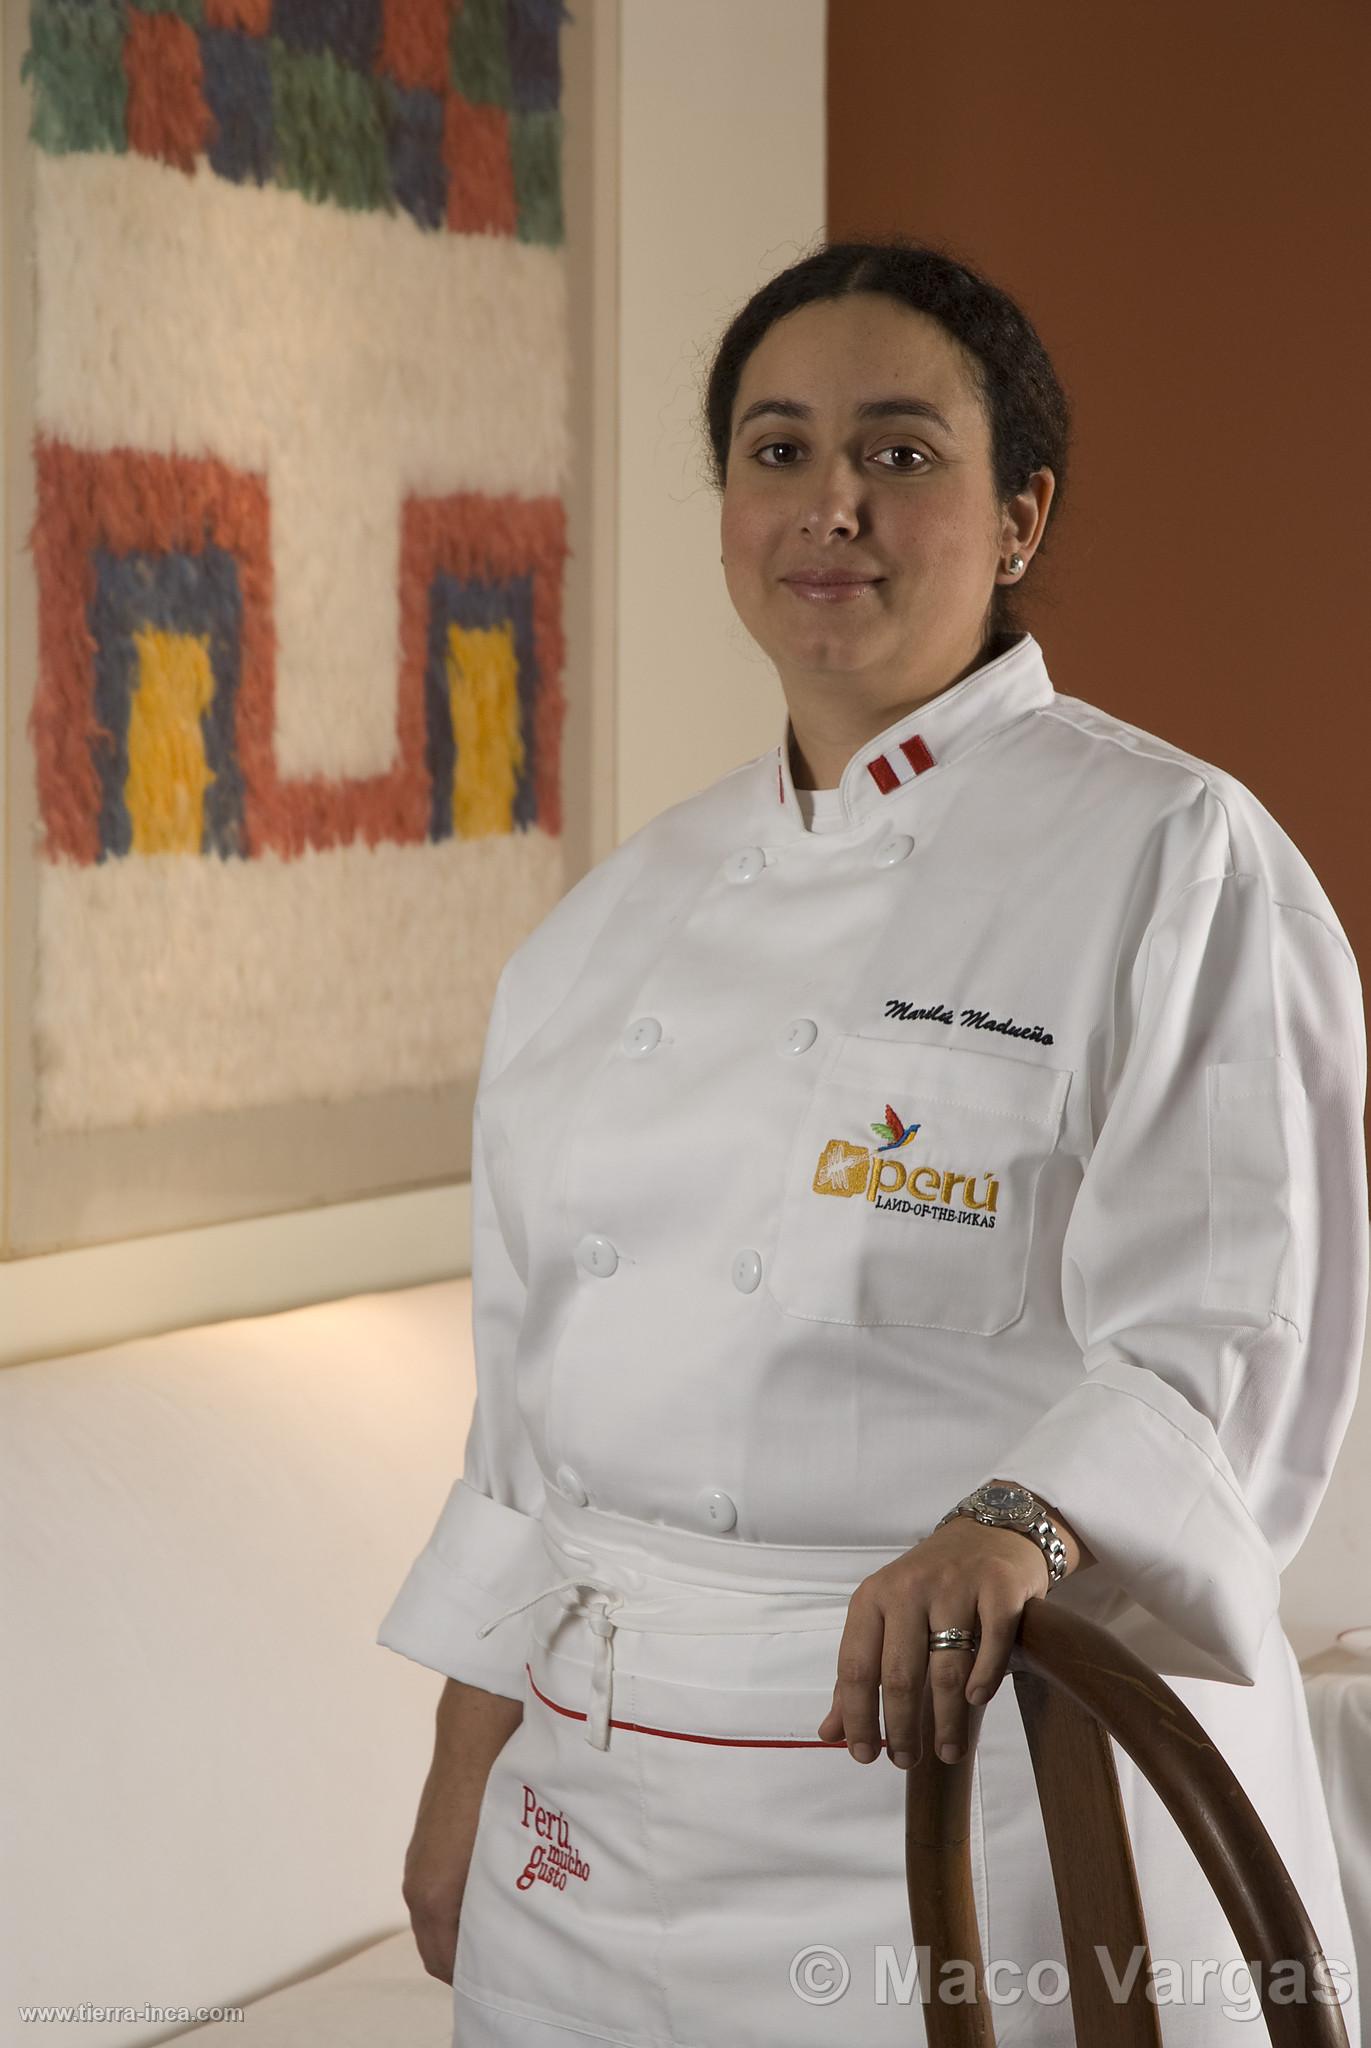 Chef Marilú Madueño